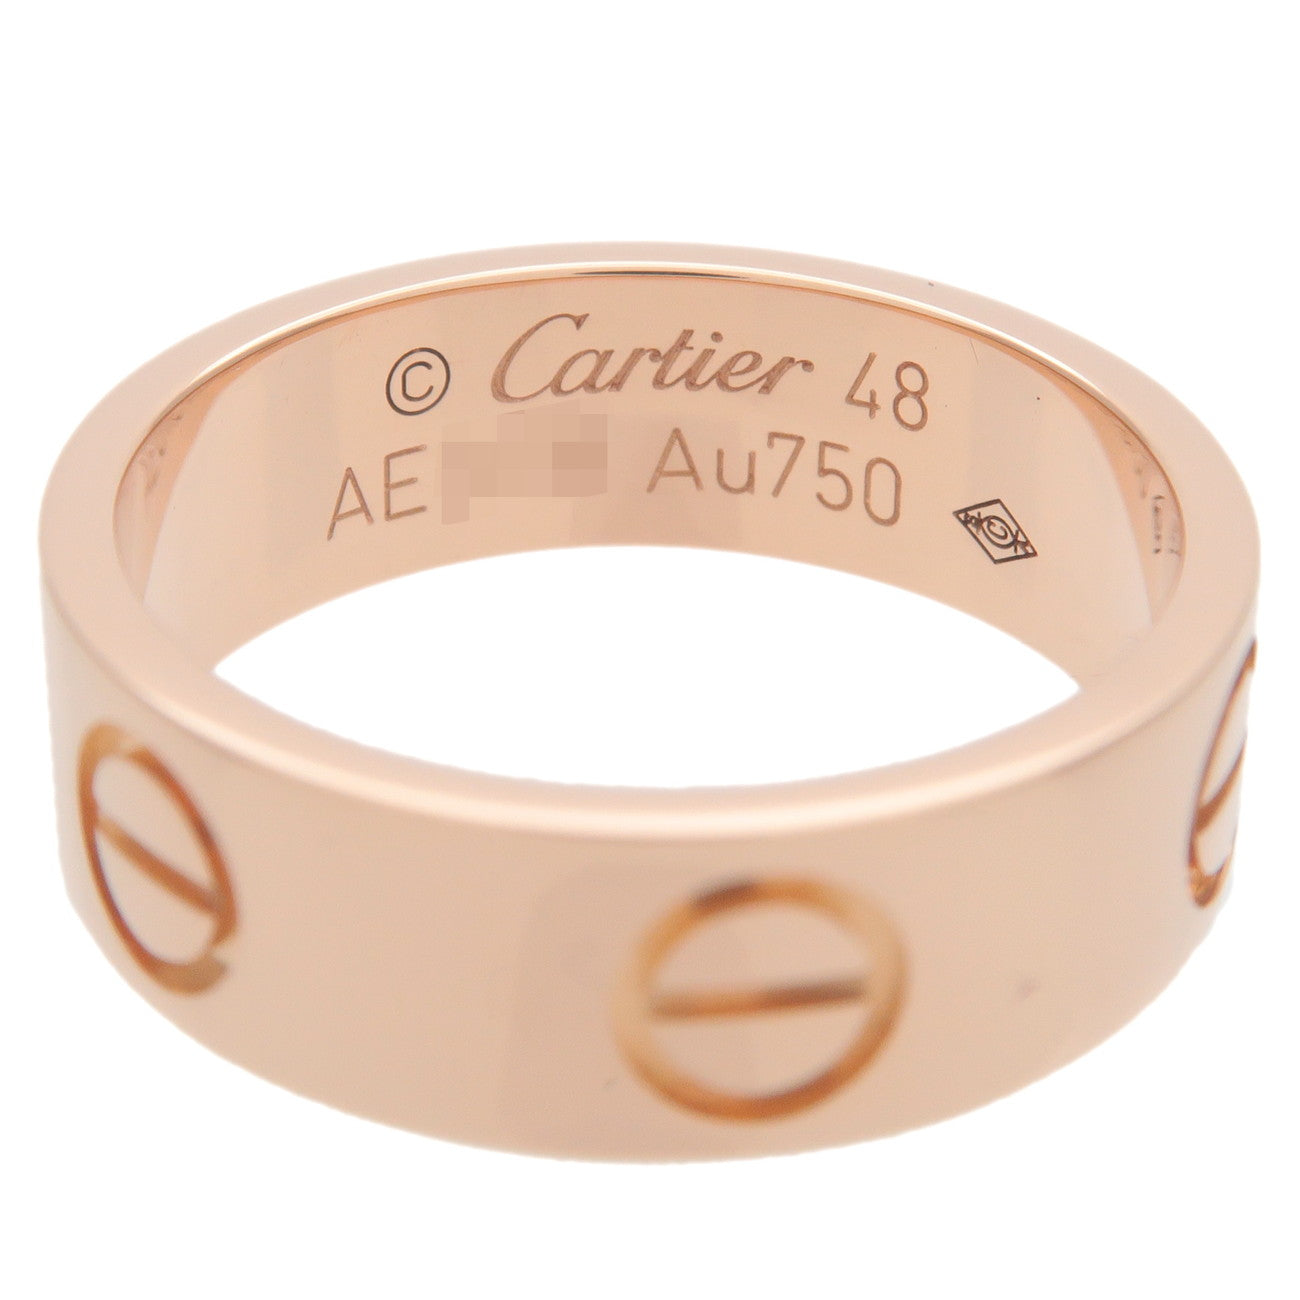 Cartier Love Ring K18PG 750 PG Rose Gold #48 US4.5-5 EU48.5